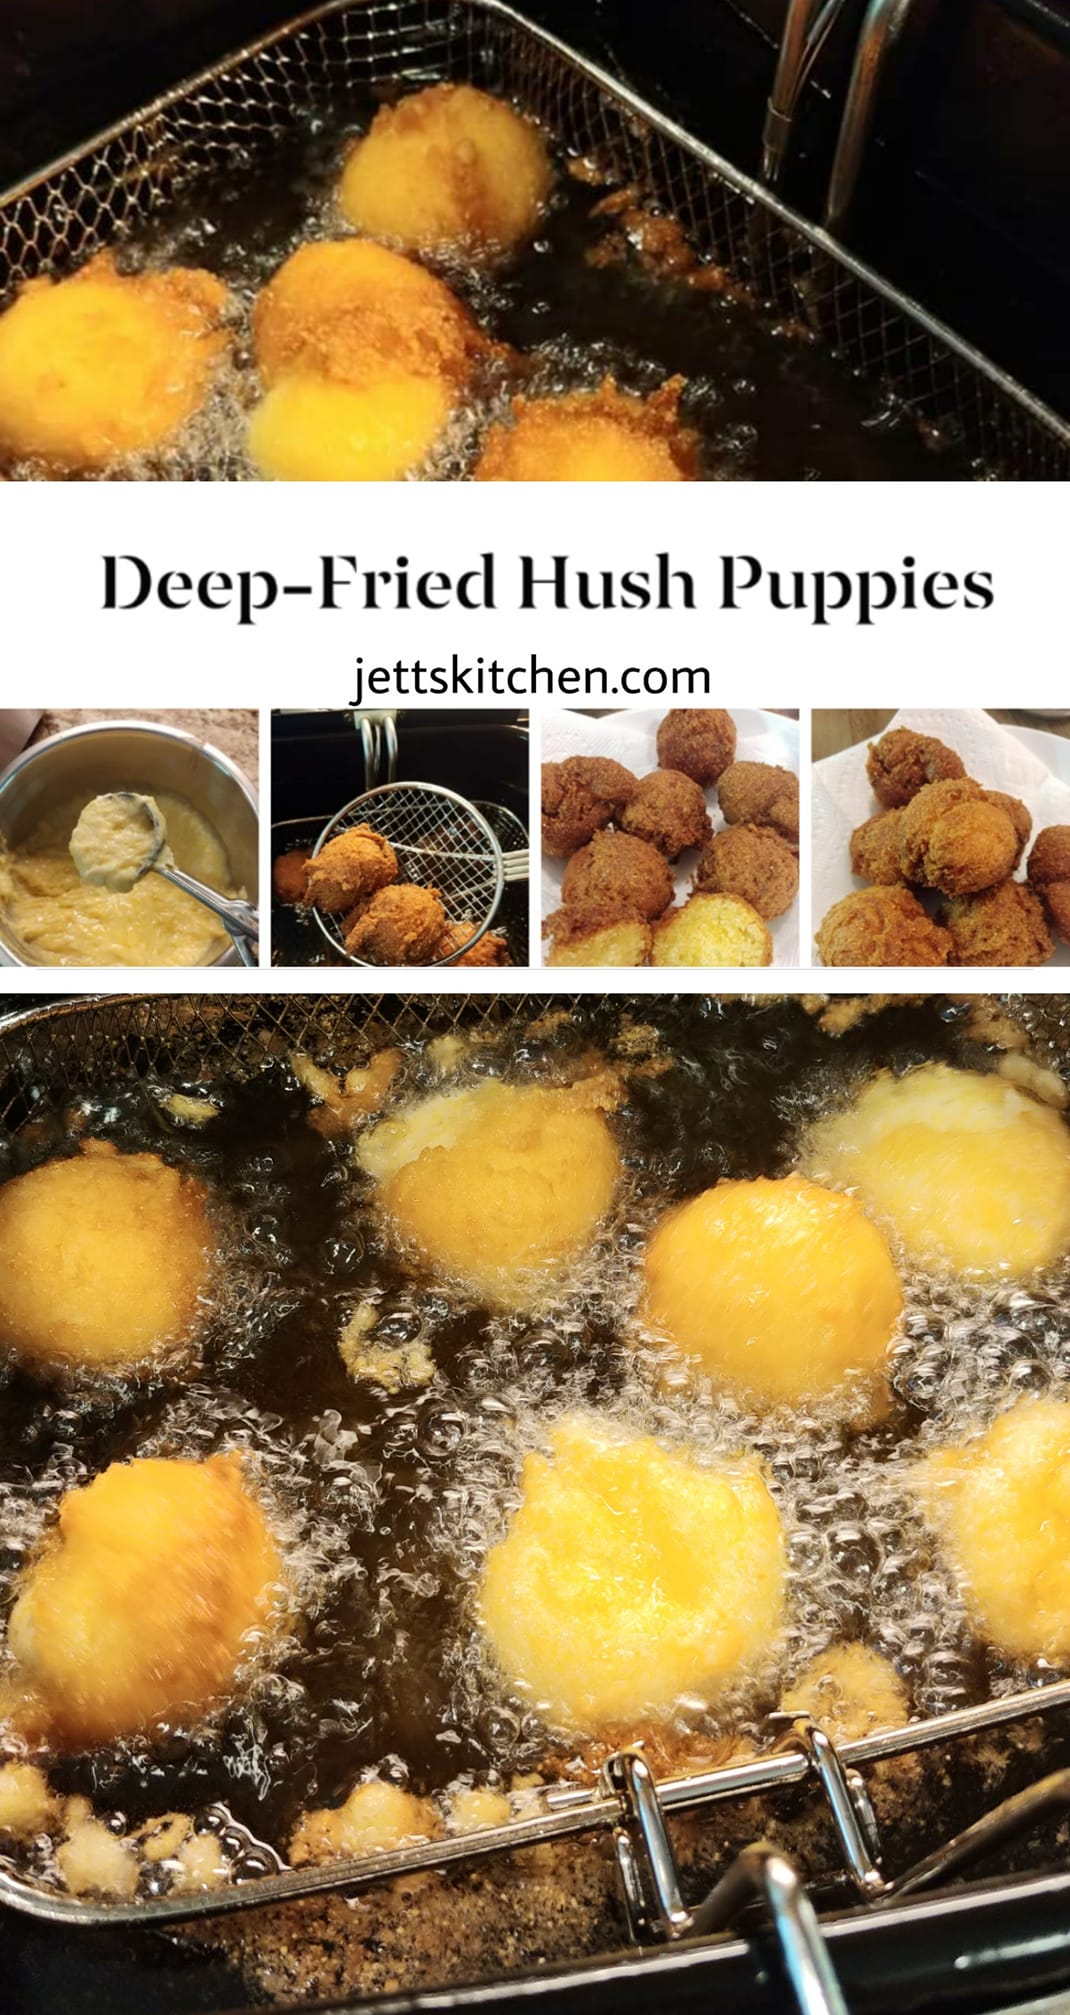 Easy Hush Puppies Recipe - How to Make Homemade Hush Puppies